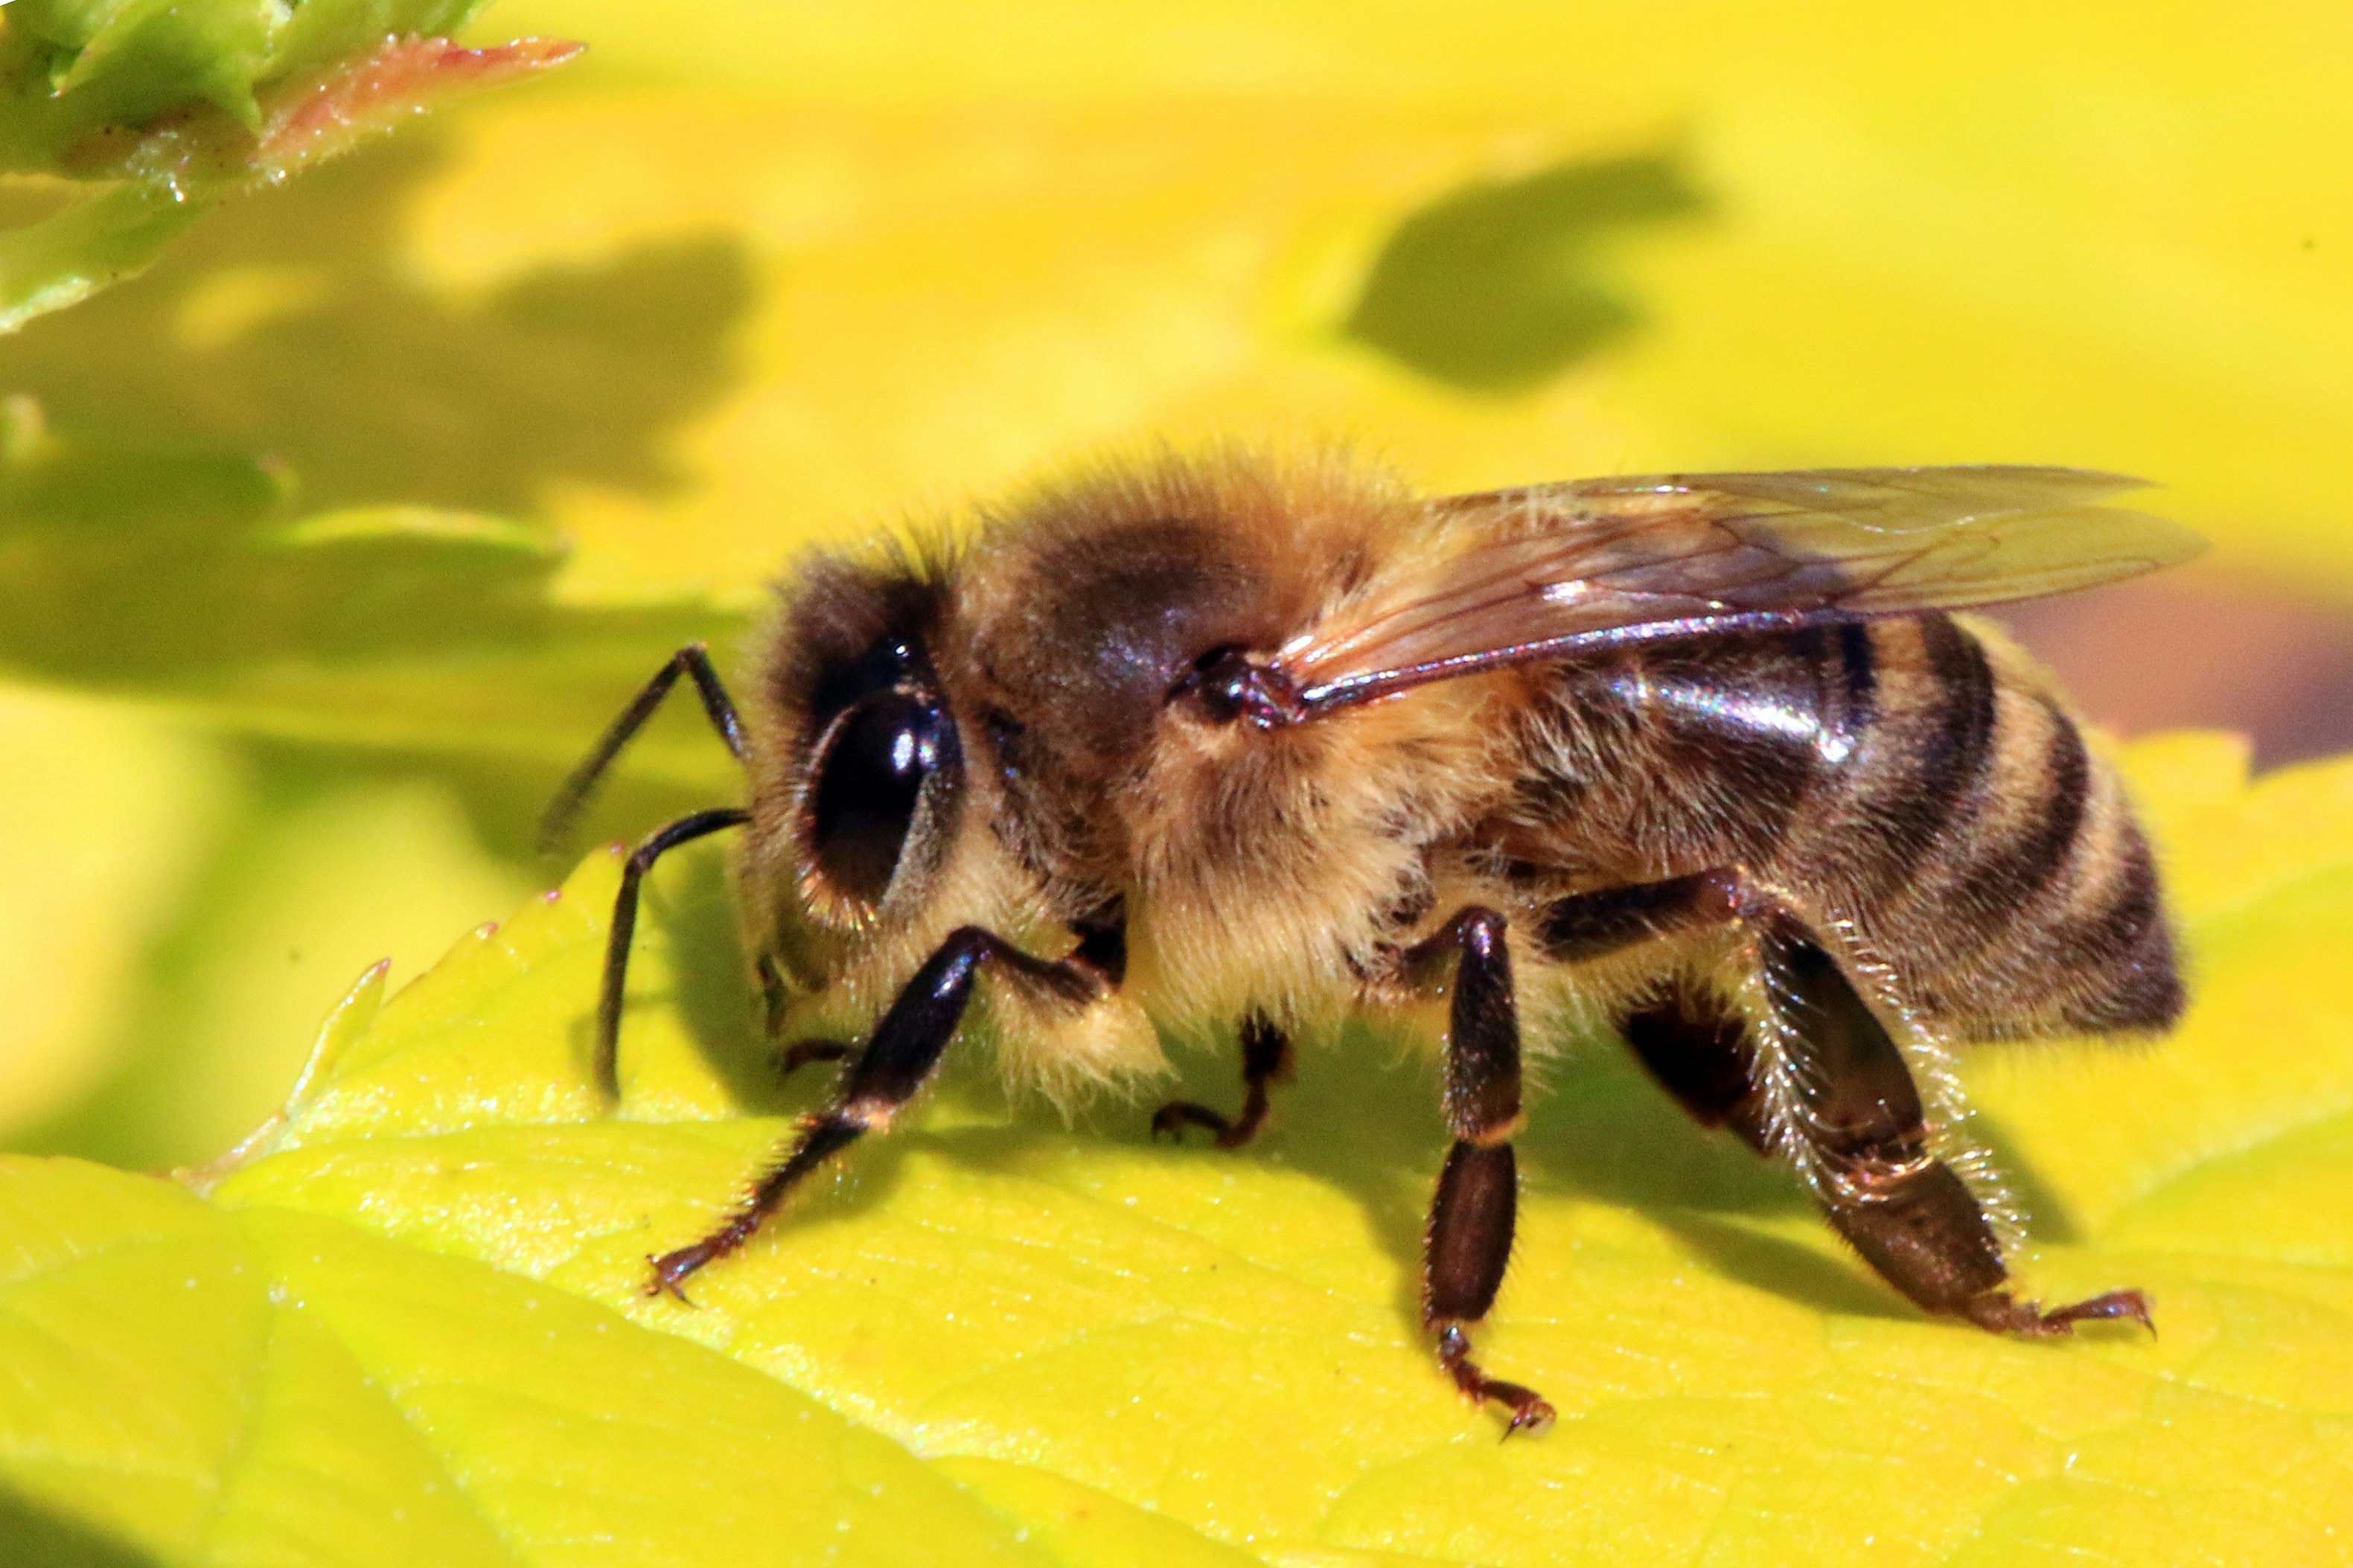 A honey bee sitting on a leaf